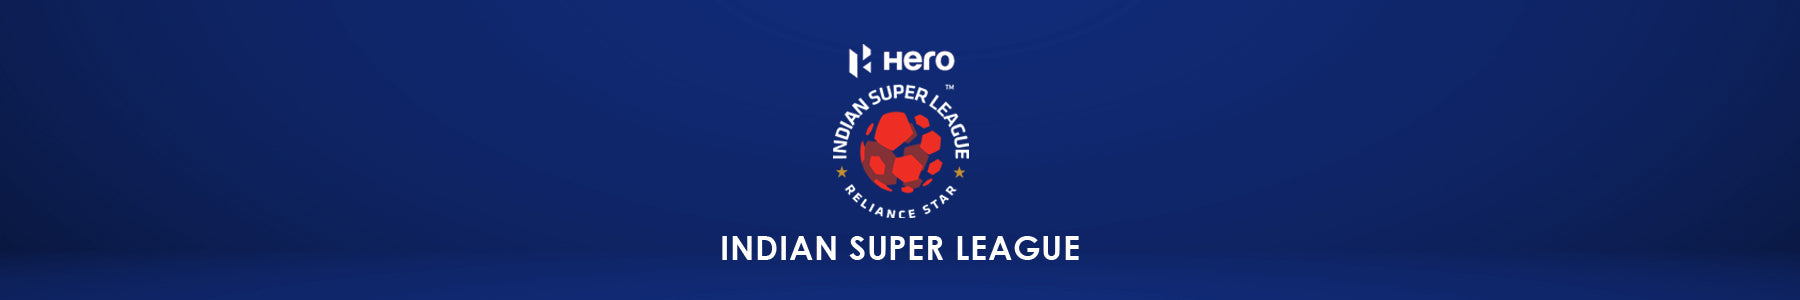 Indian Super League Banner